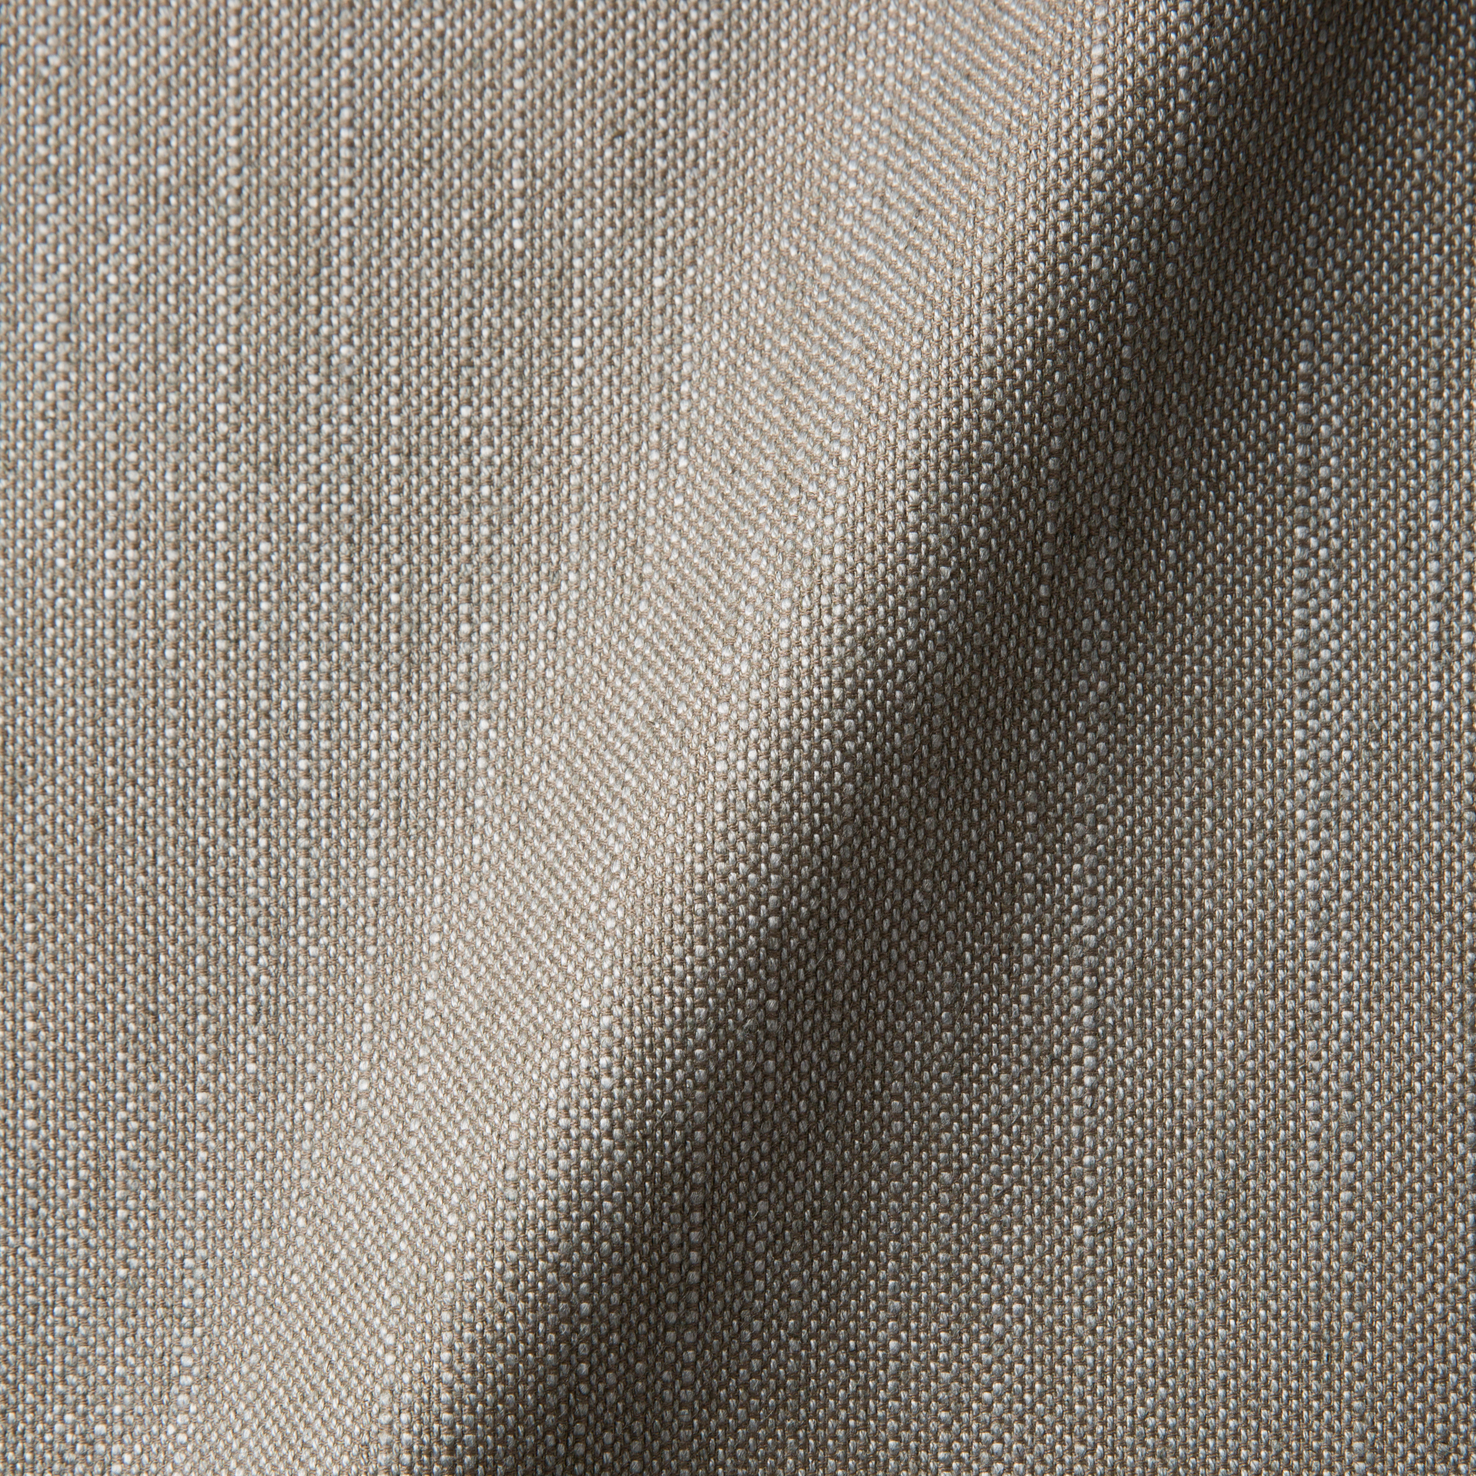 Fabric sample Macchedil Sottile Light Grey